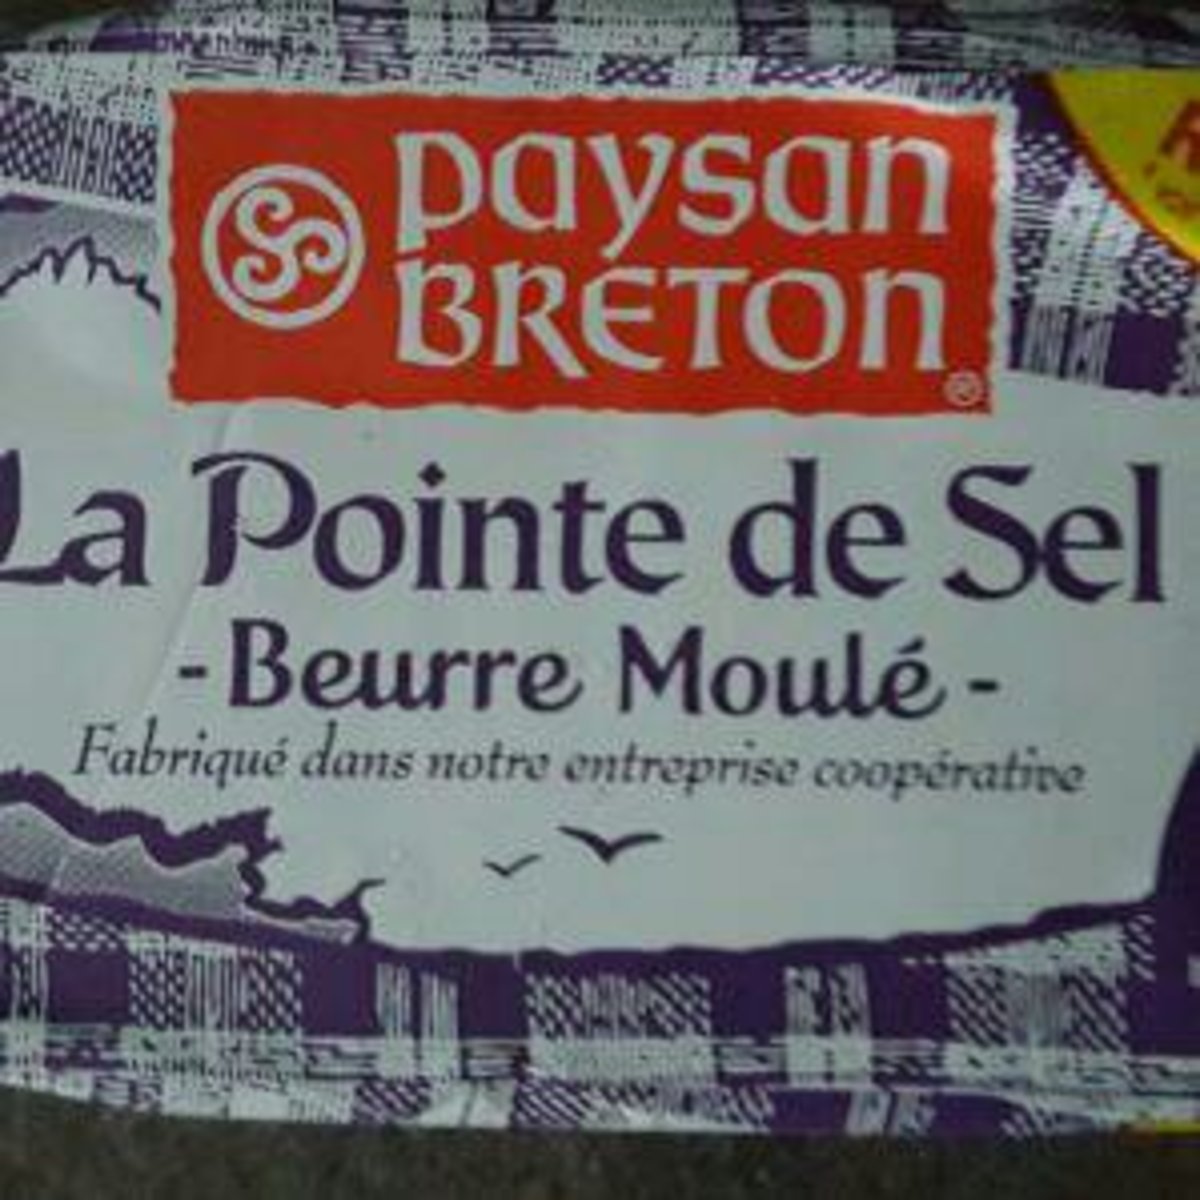 Beurre moulé pointe de sel PAYSAN BRETON, 250g